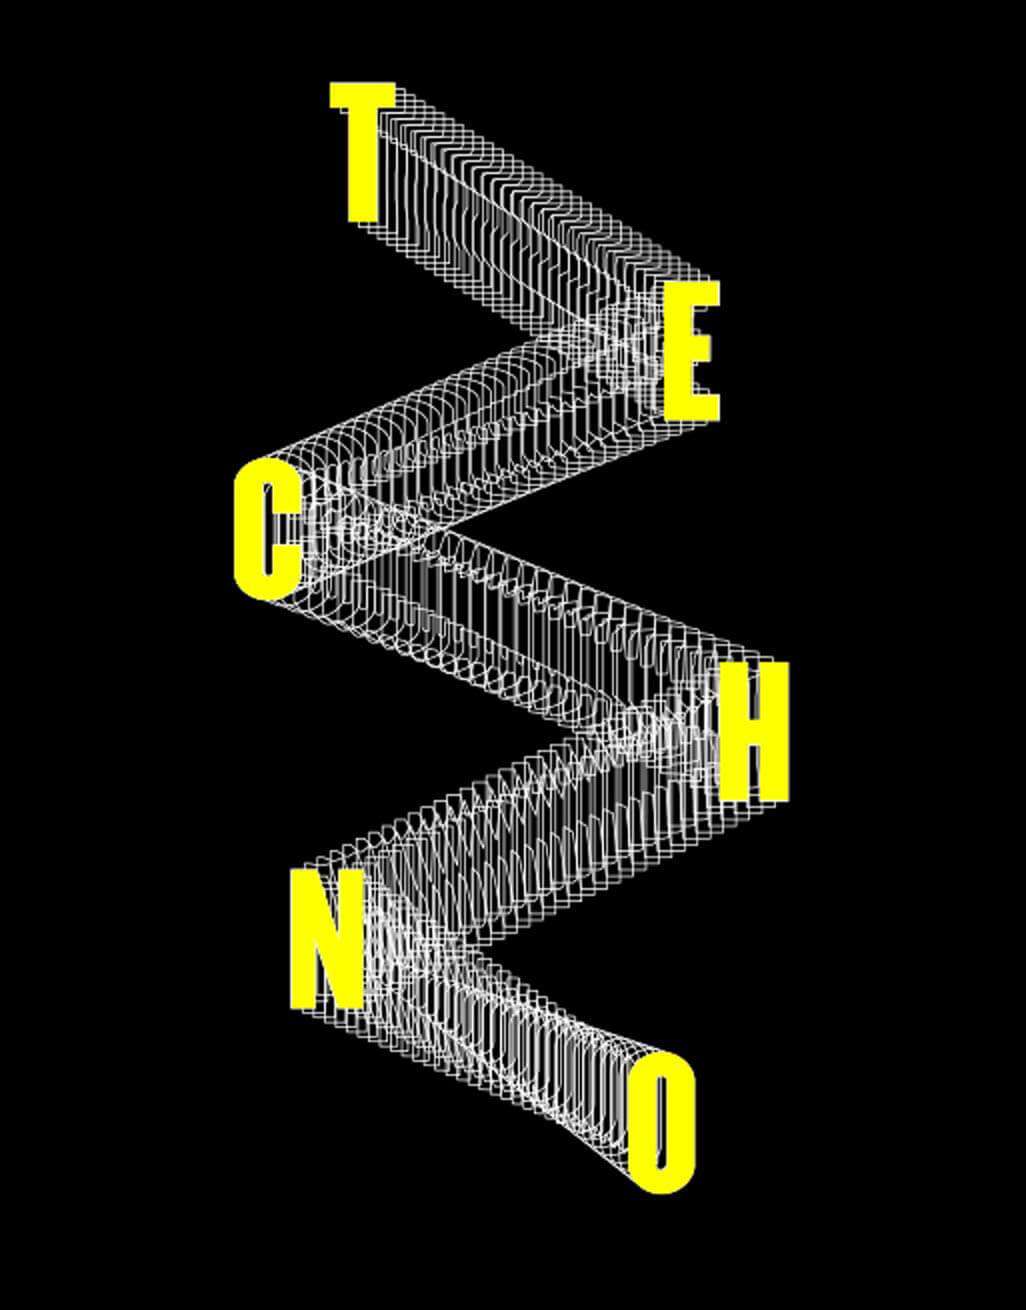 Techno Flow T-Shirt